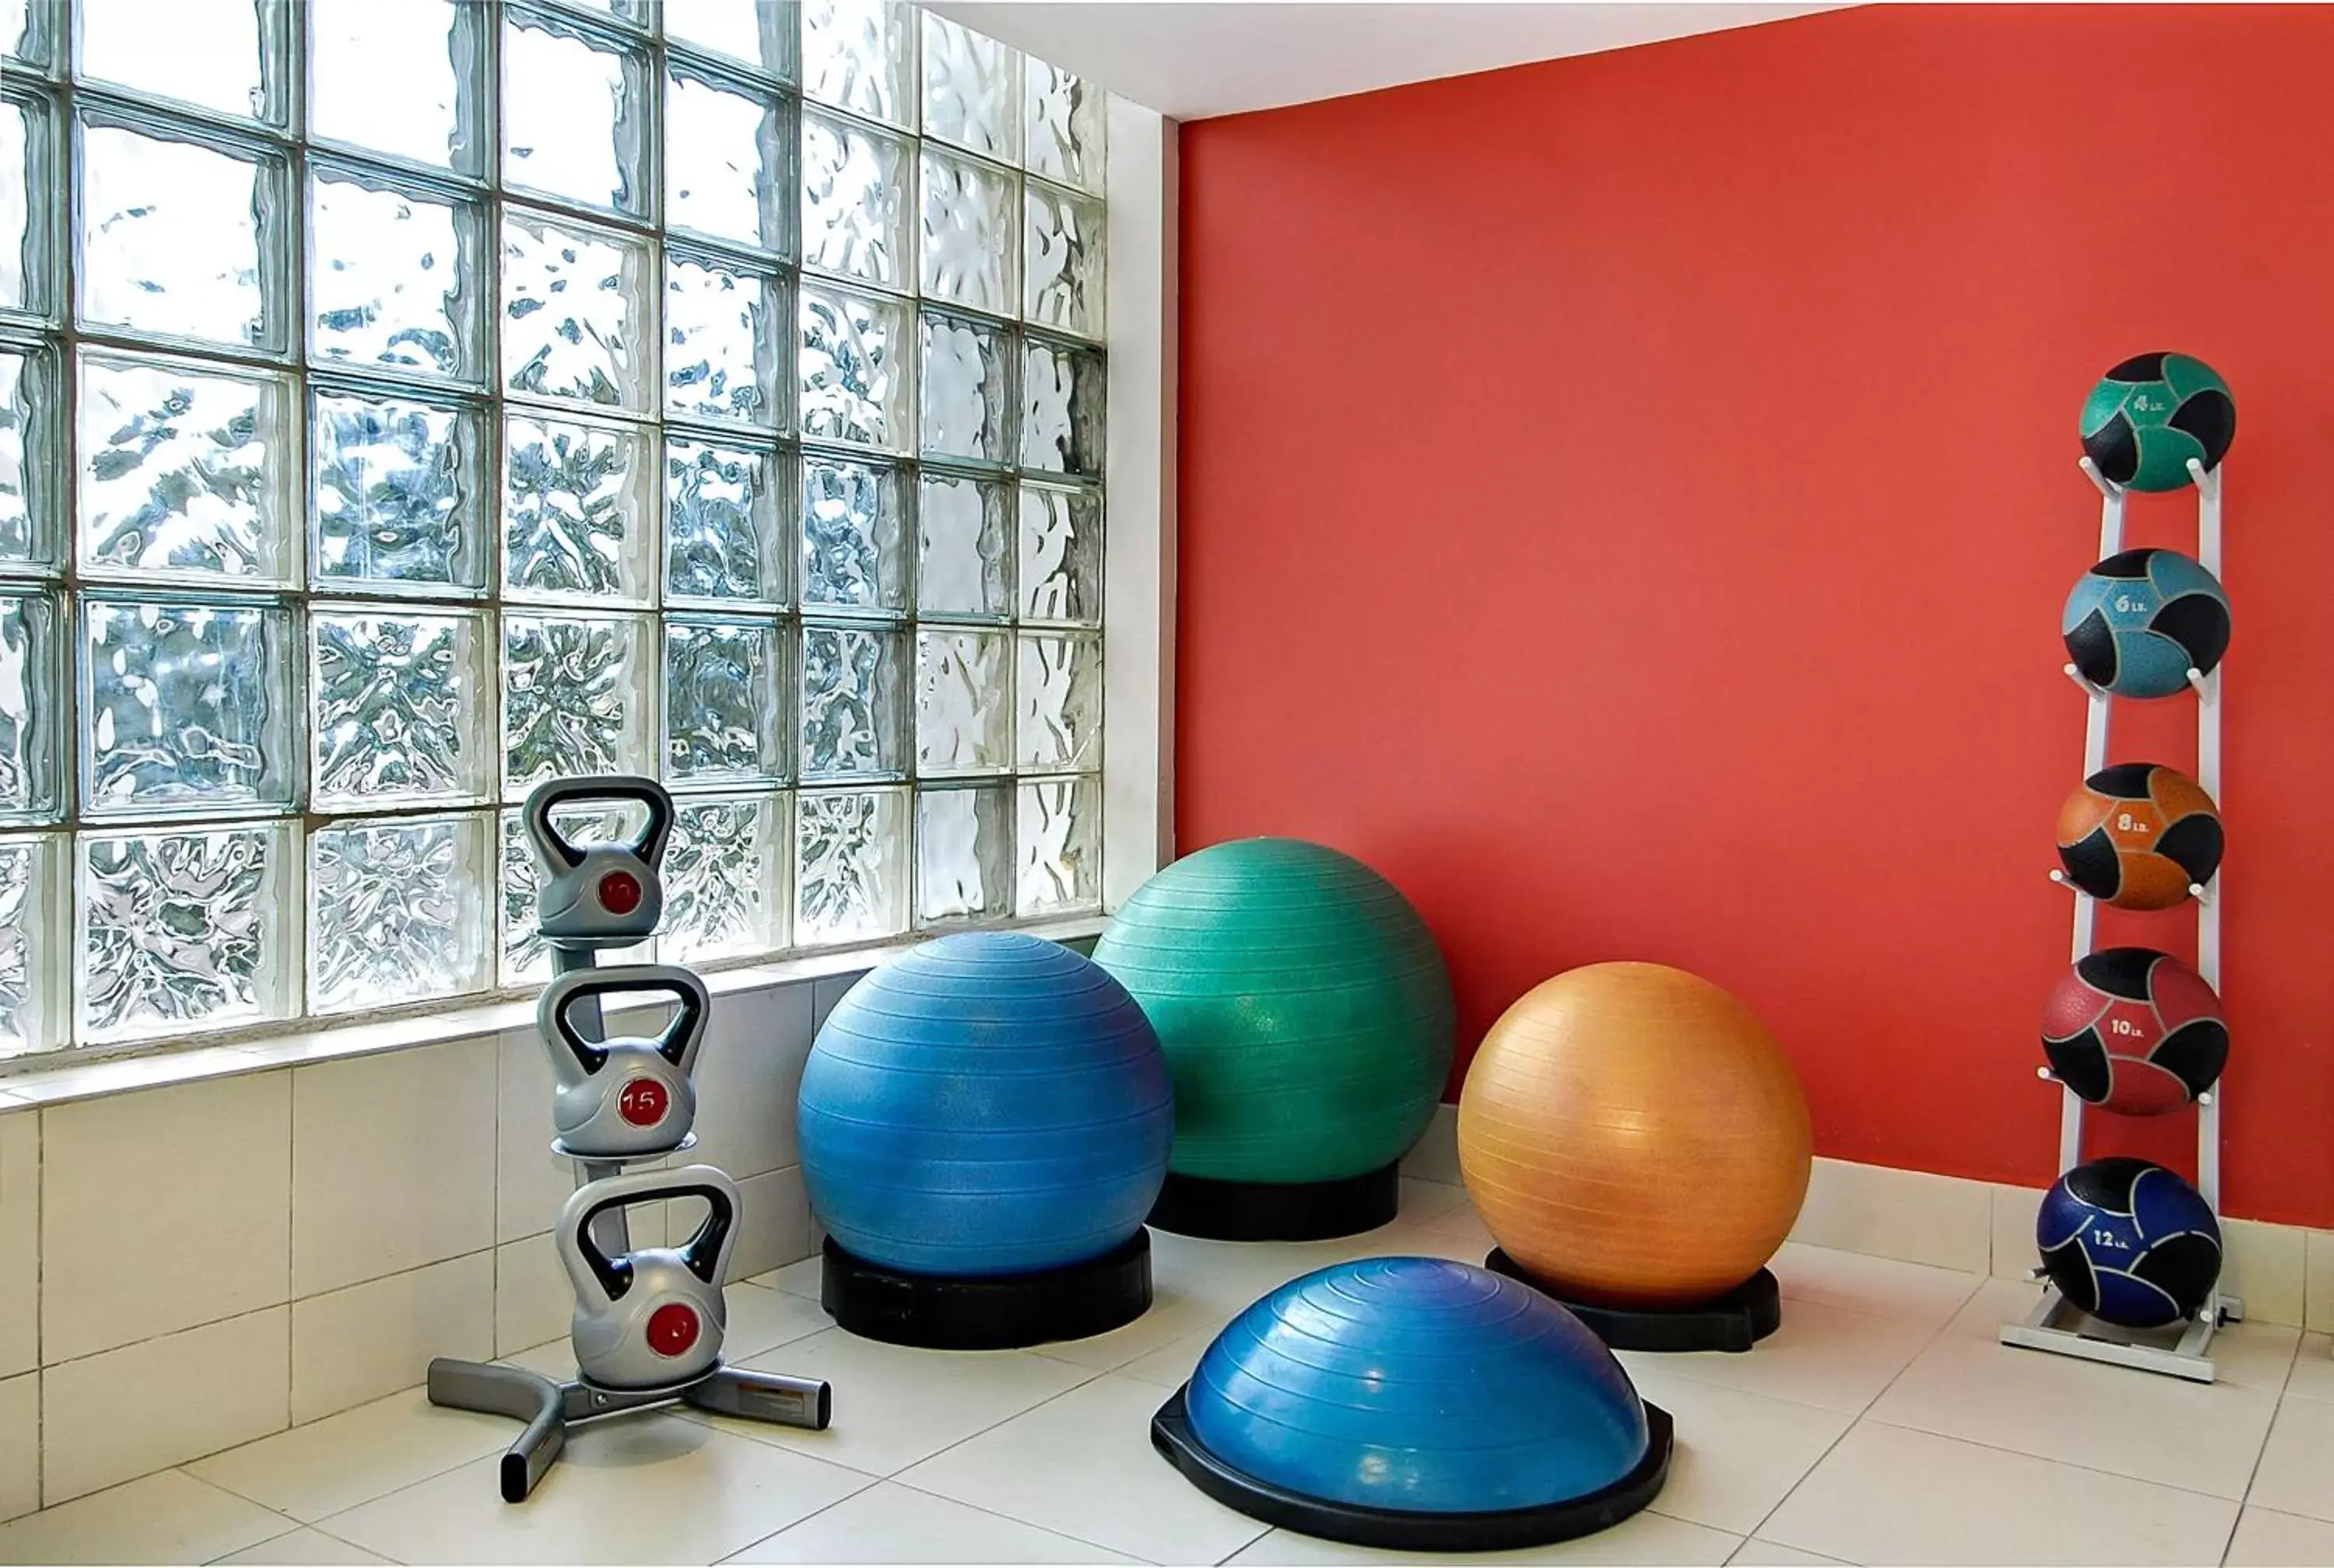 Fitness centre/facilities, Fitness Center/Facilities in The Condado Plaza Hilton